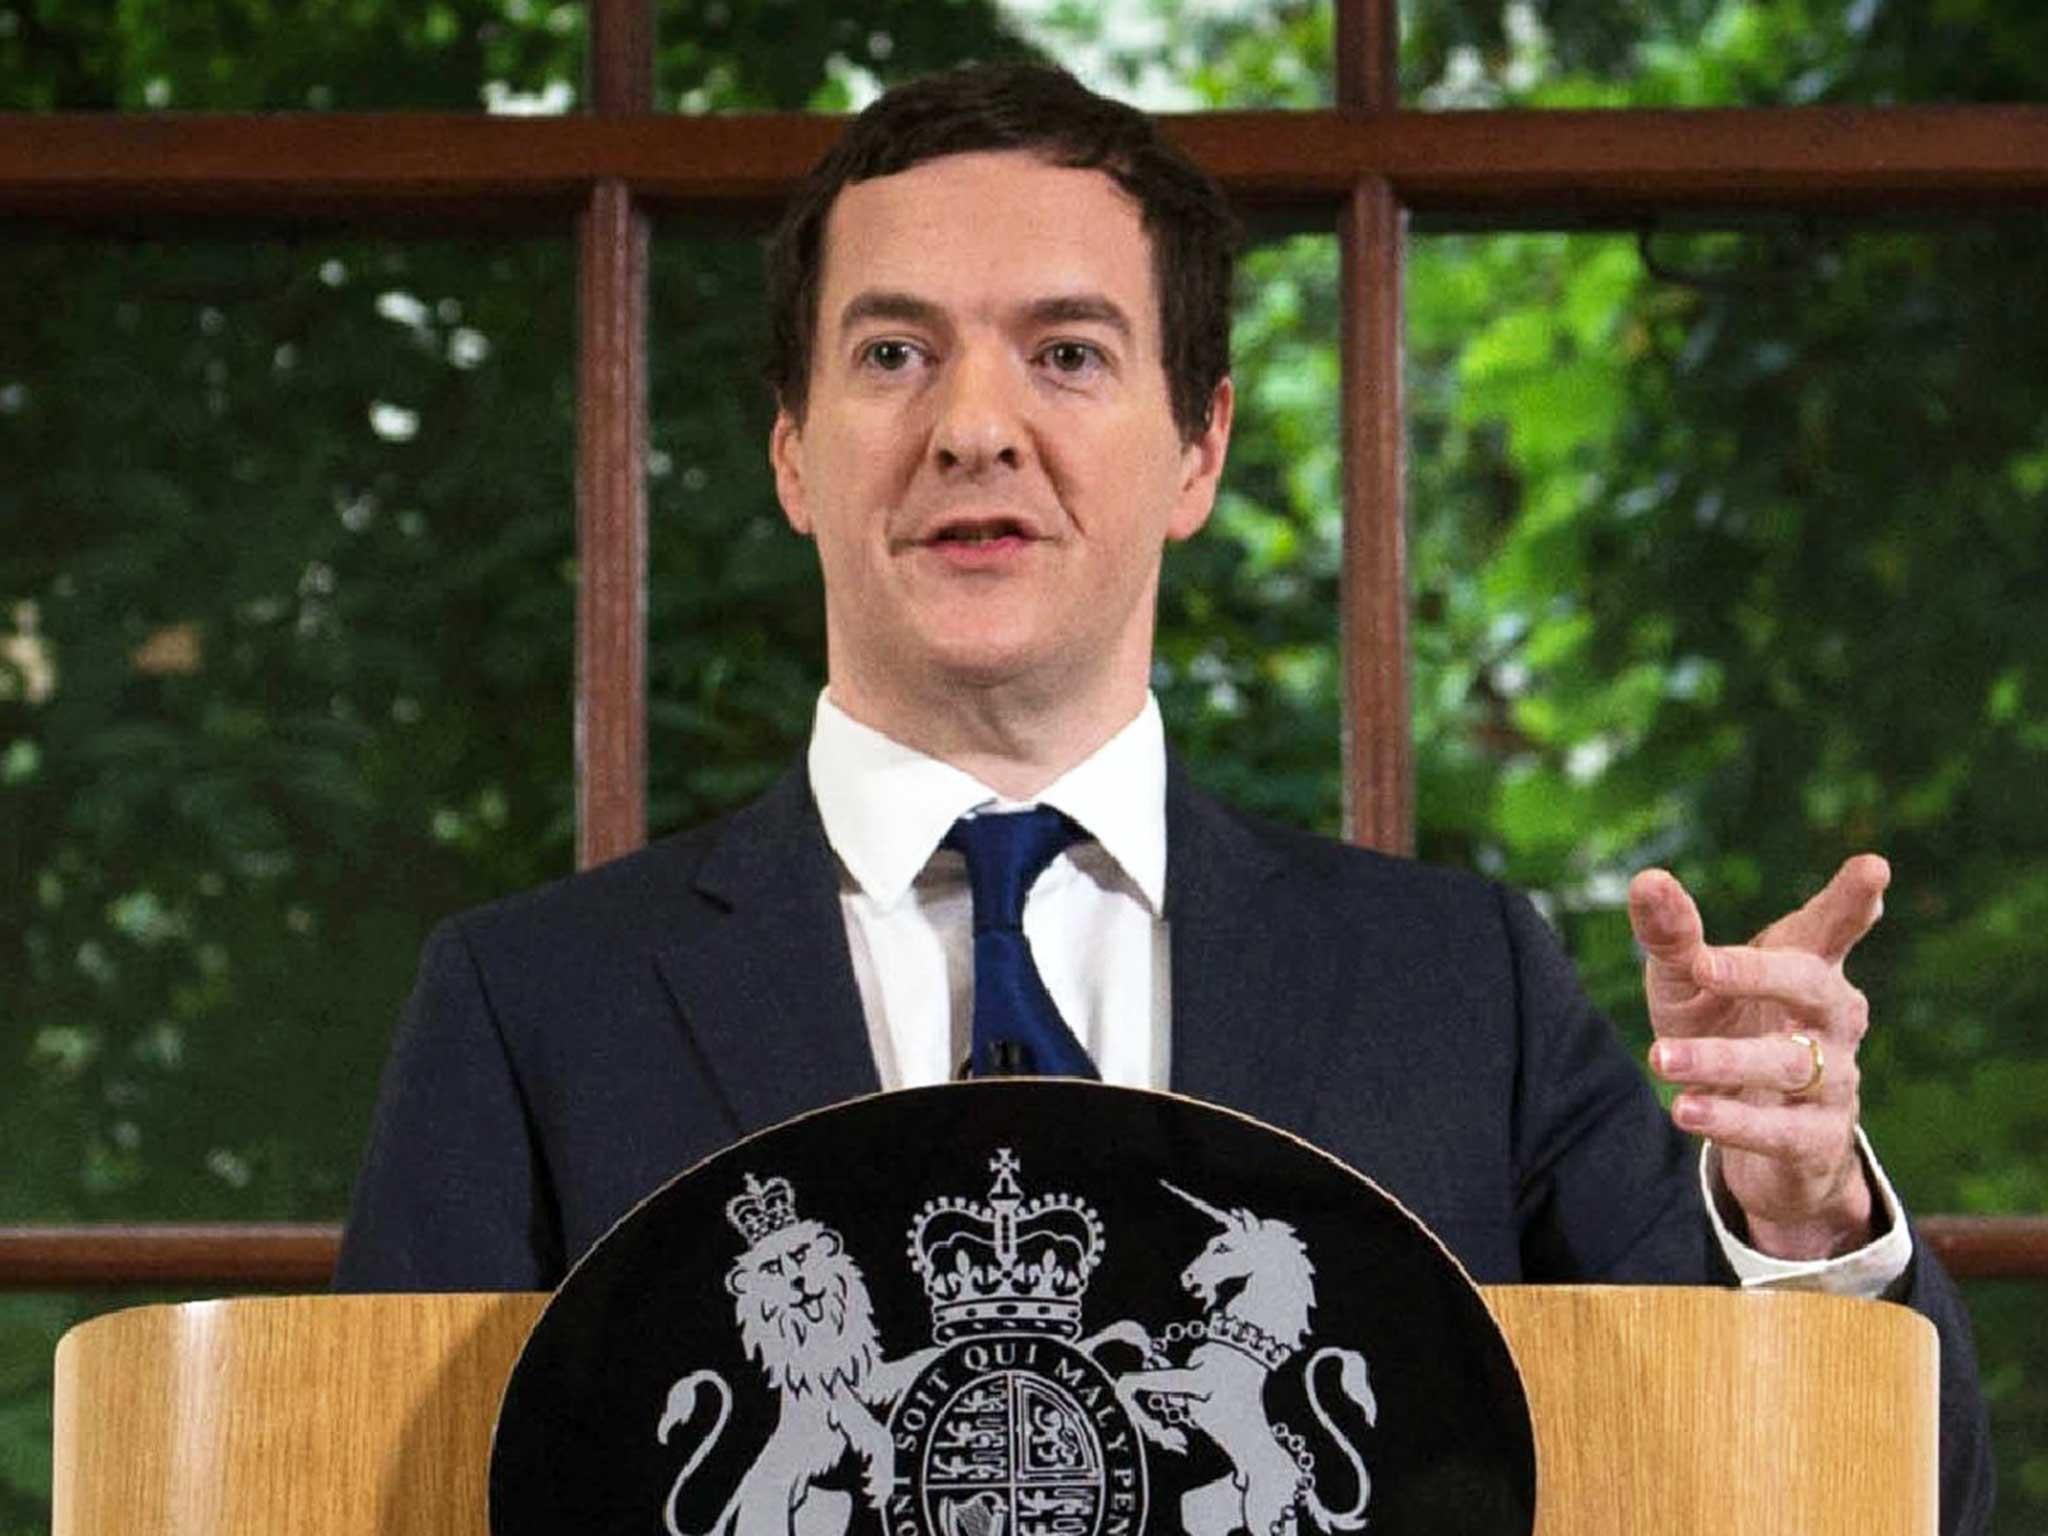 “I’m not a market speculator,” said Mr Osborne